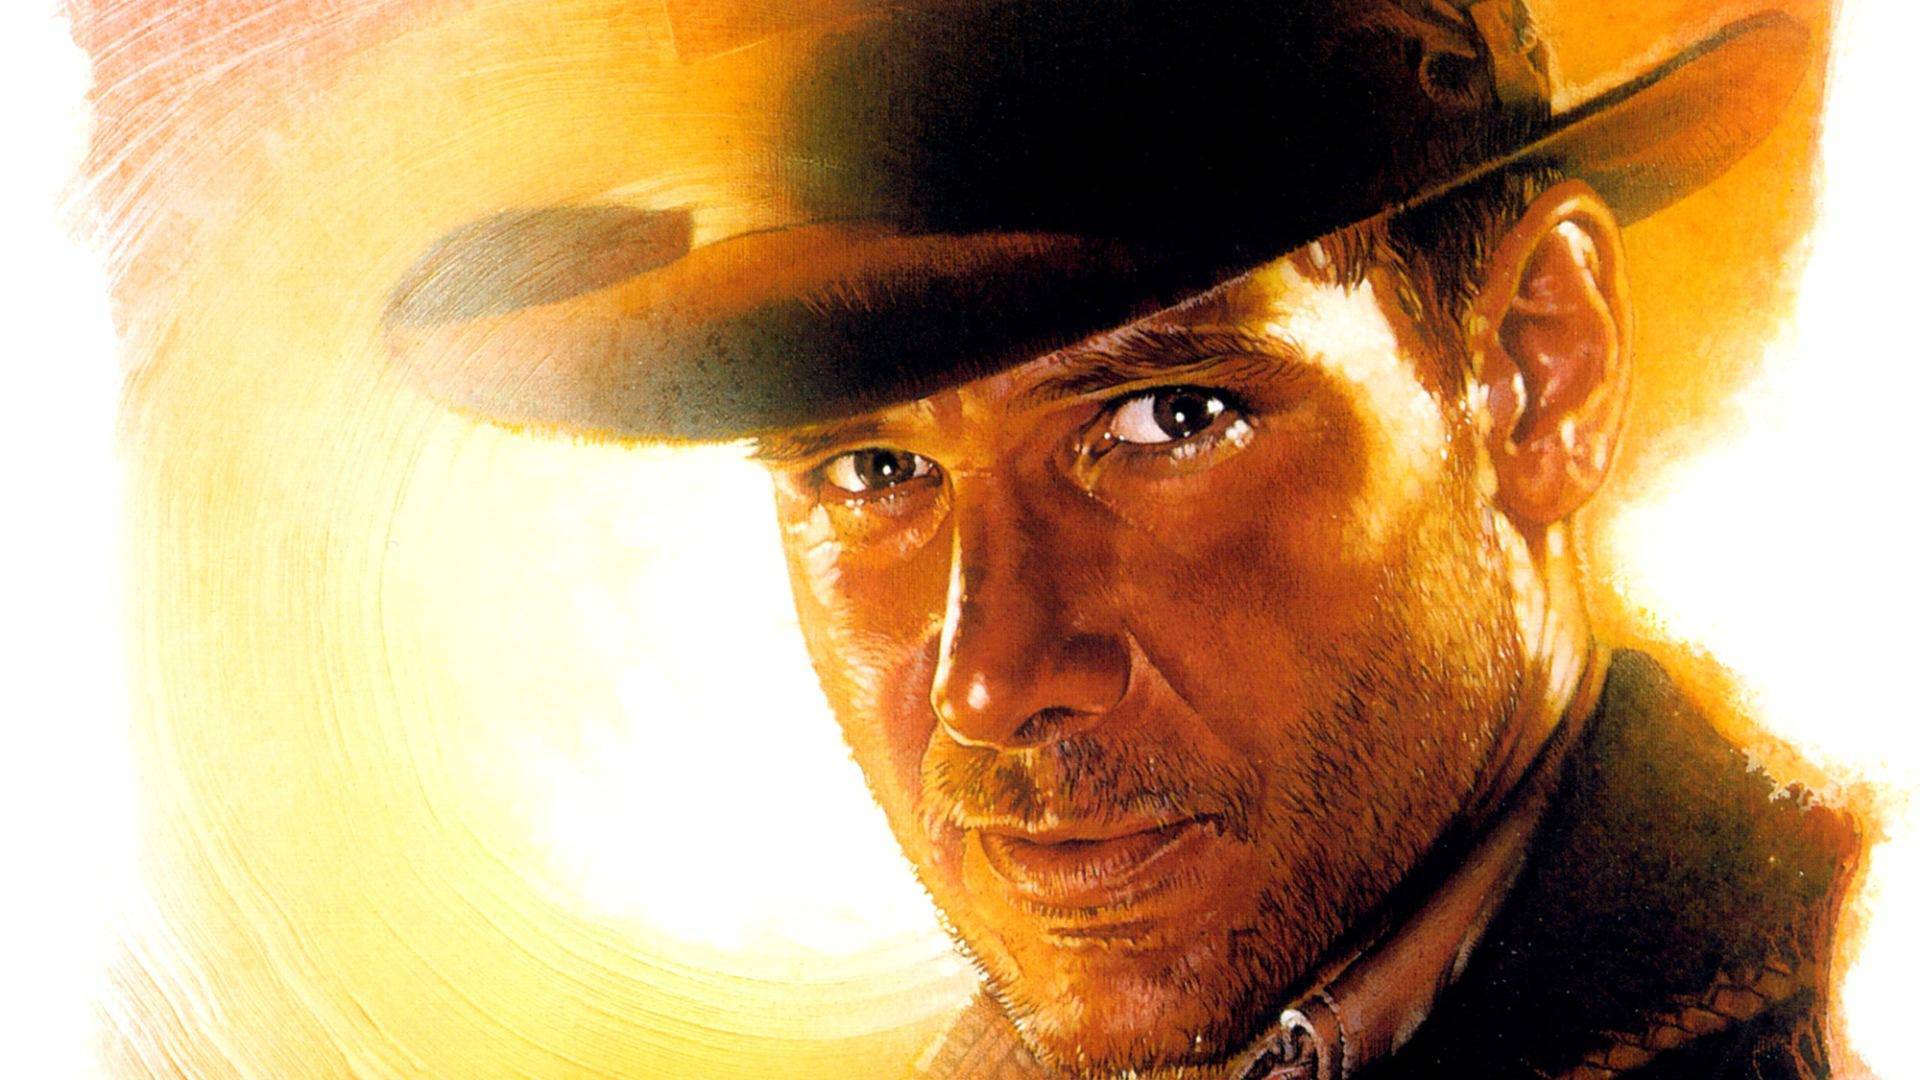 Indiana Jones poput James Bond franšize